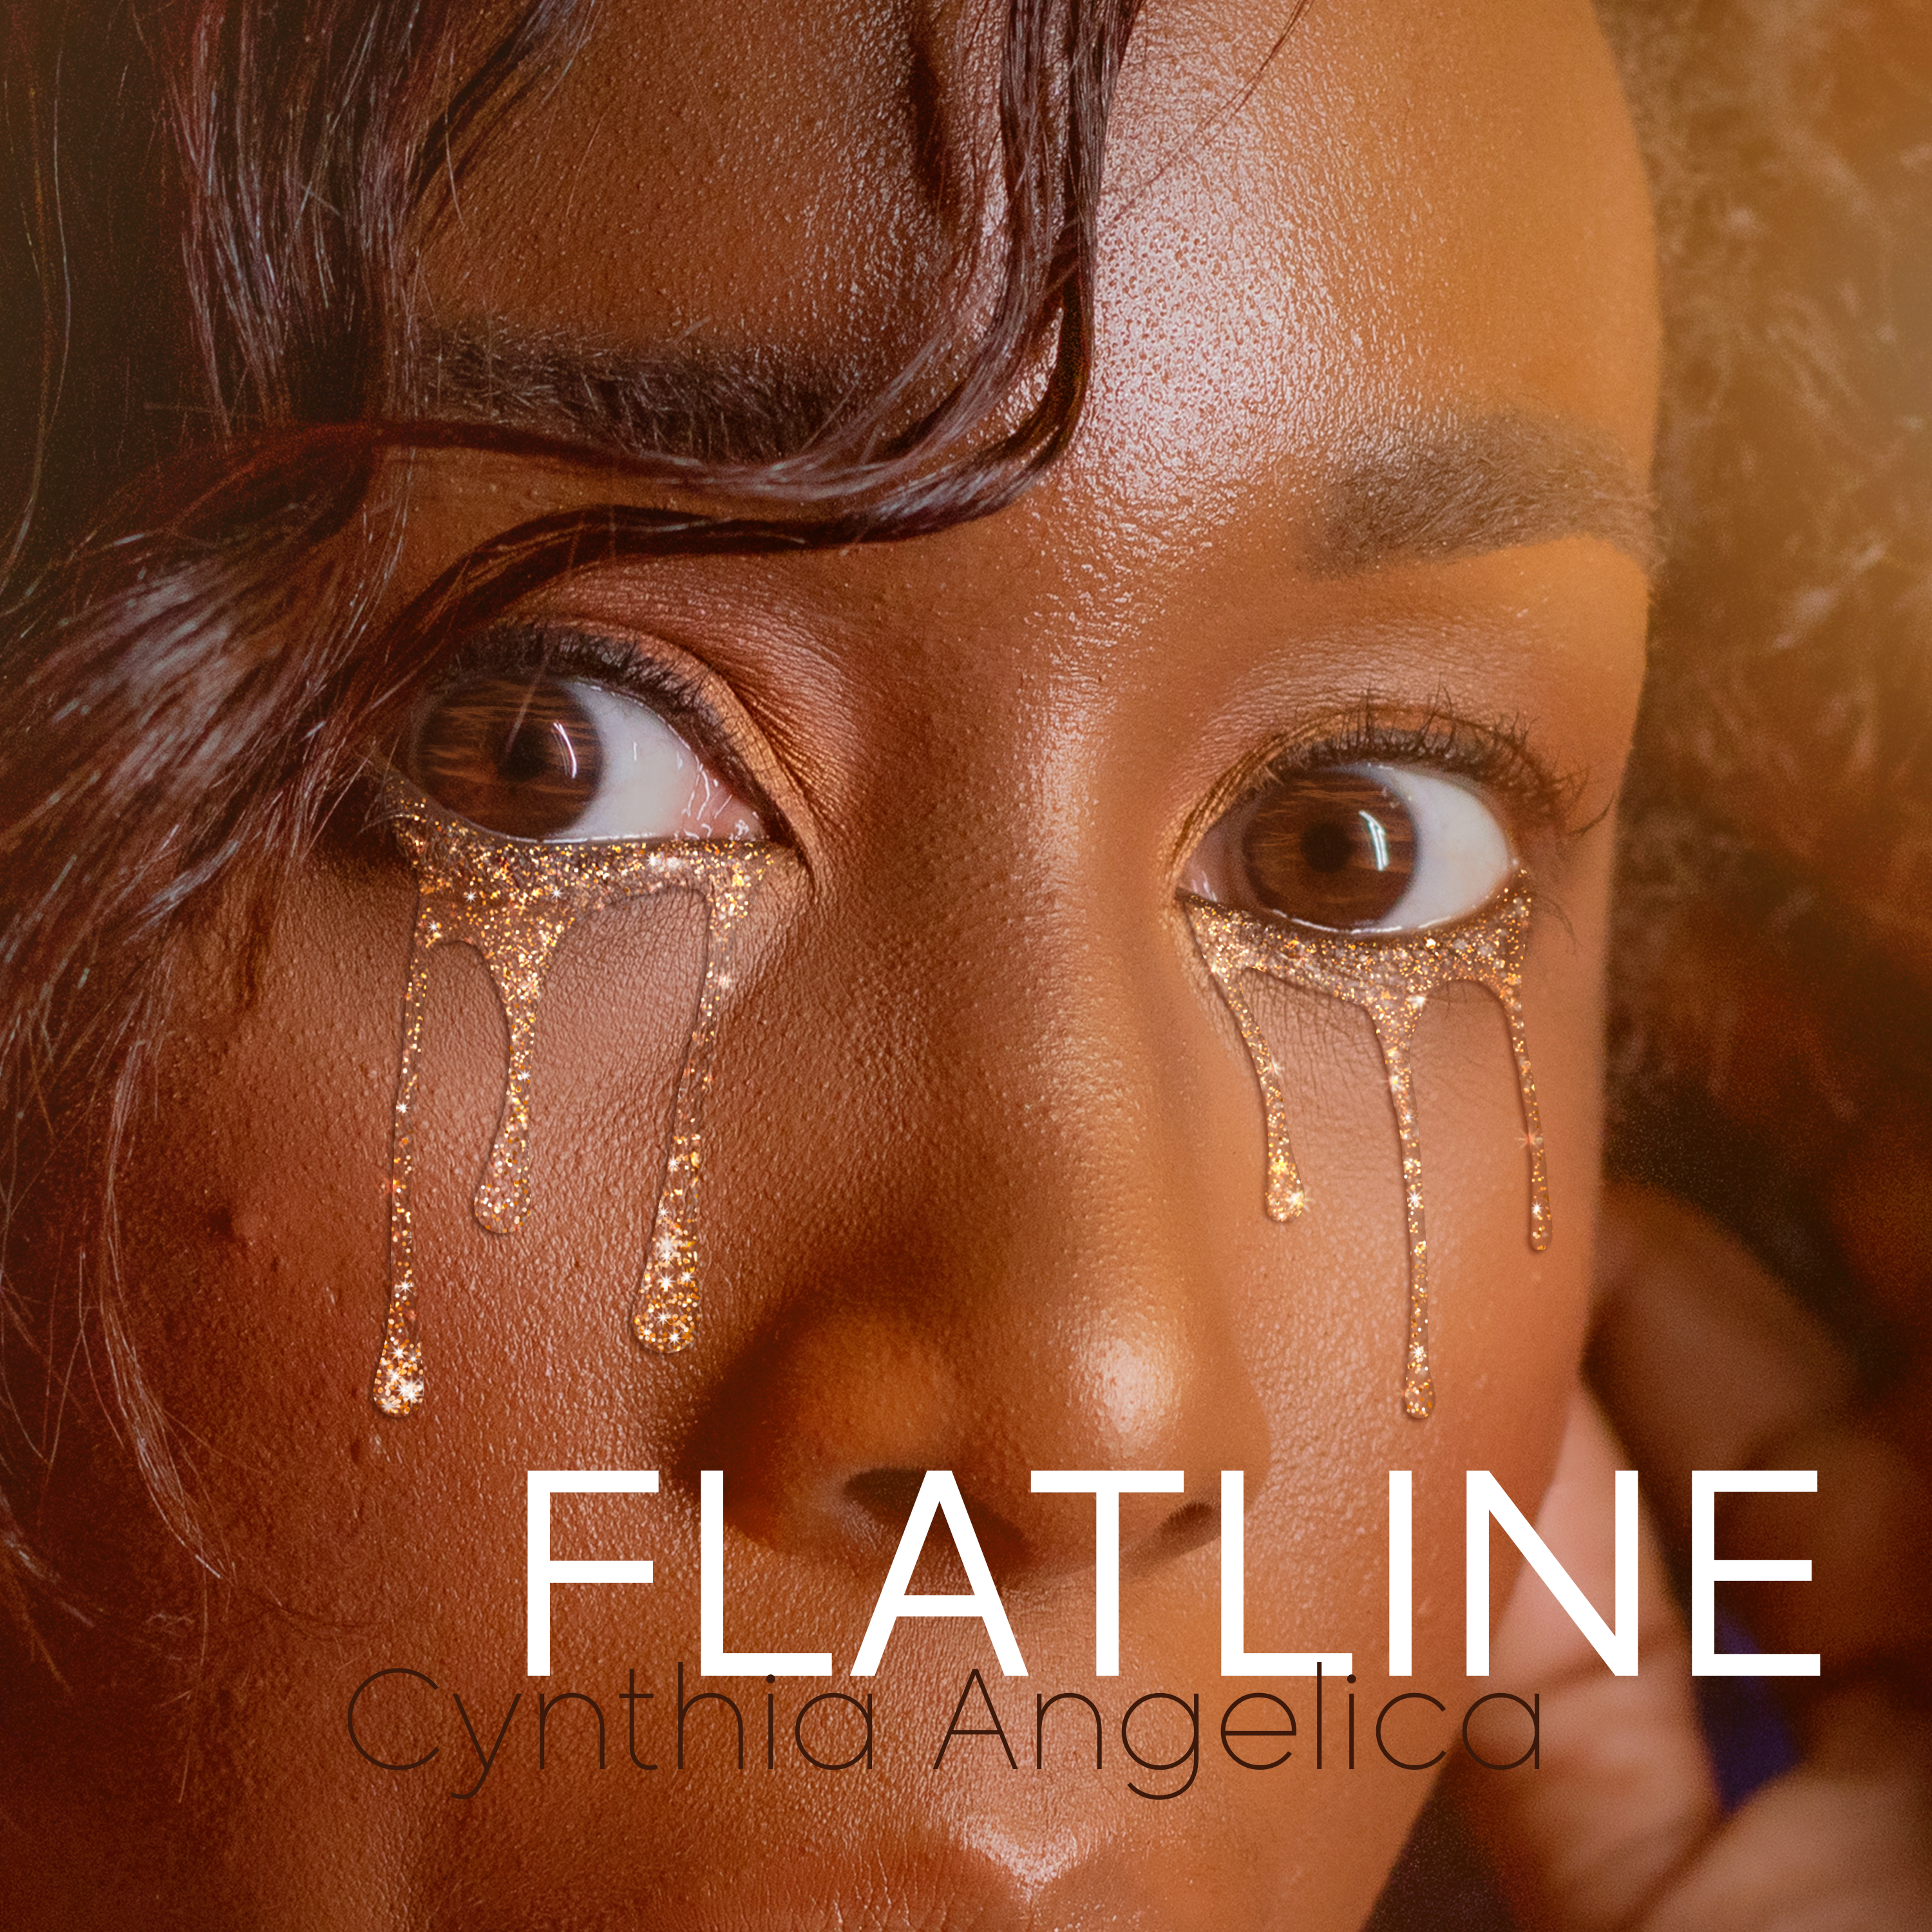 Cynthia Angelica soul crushing new single “Flatline”